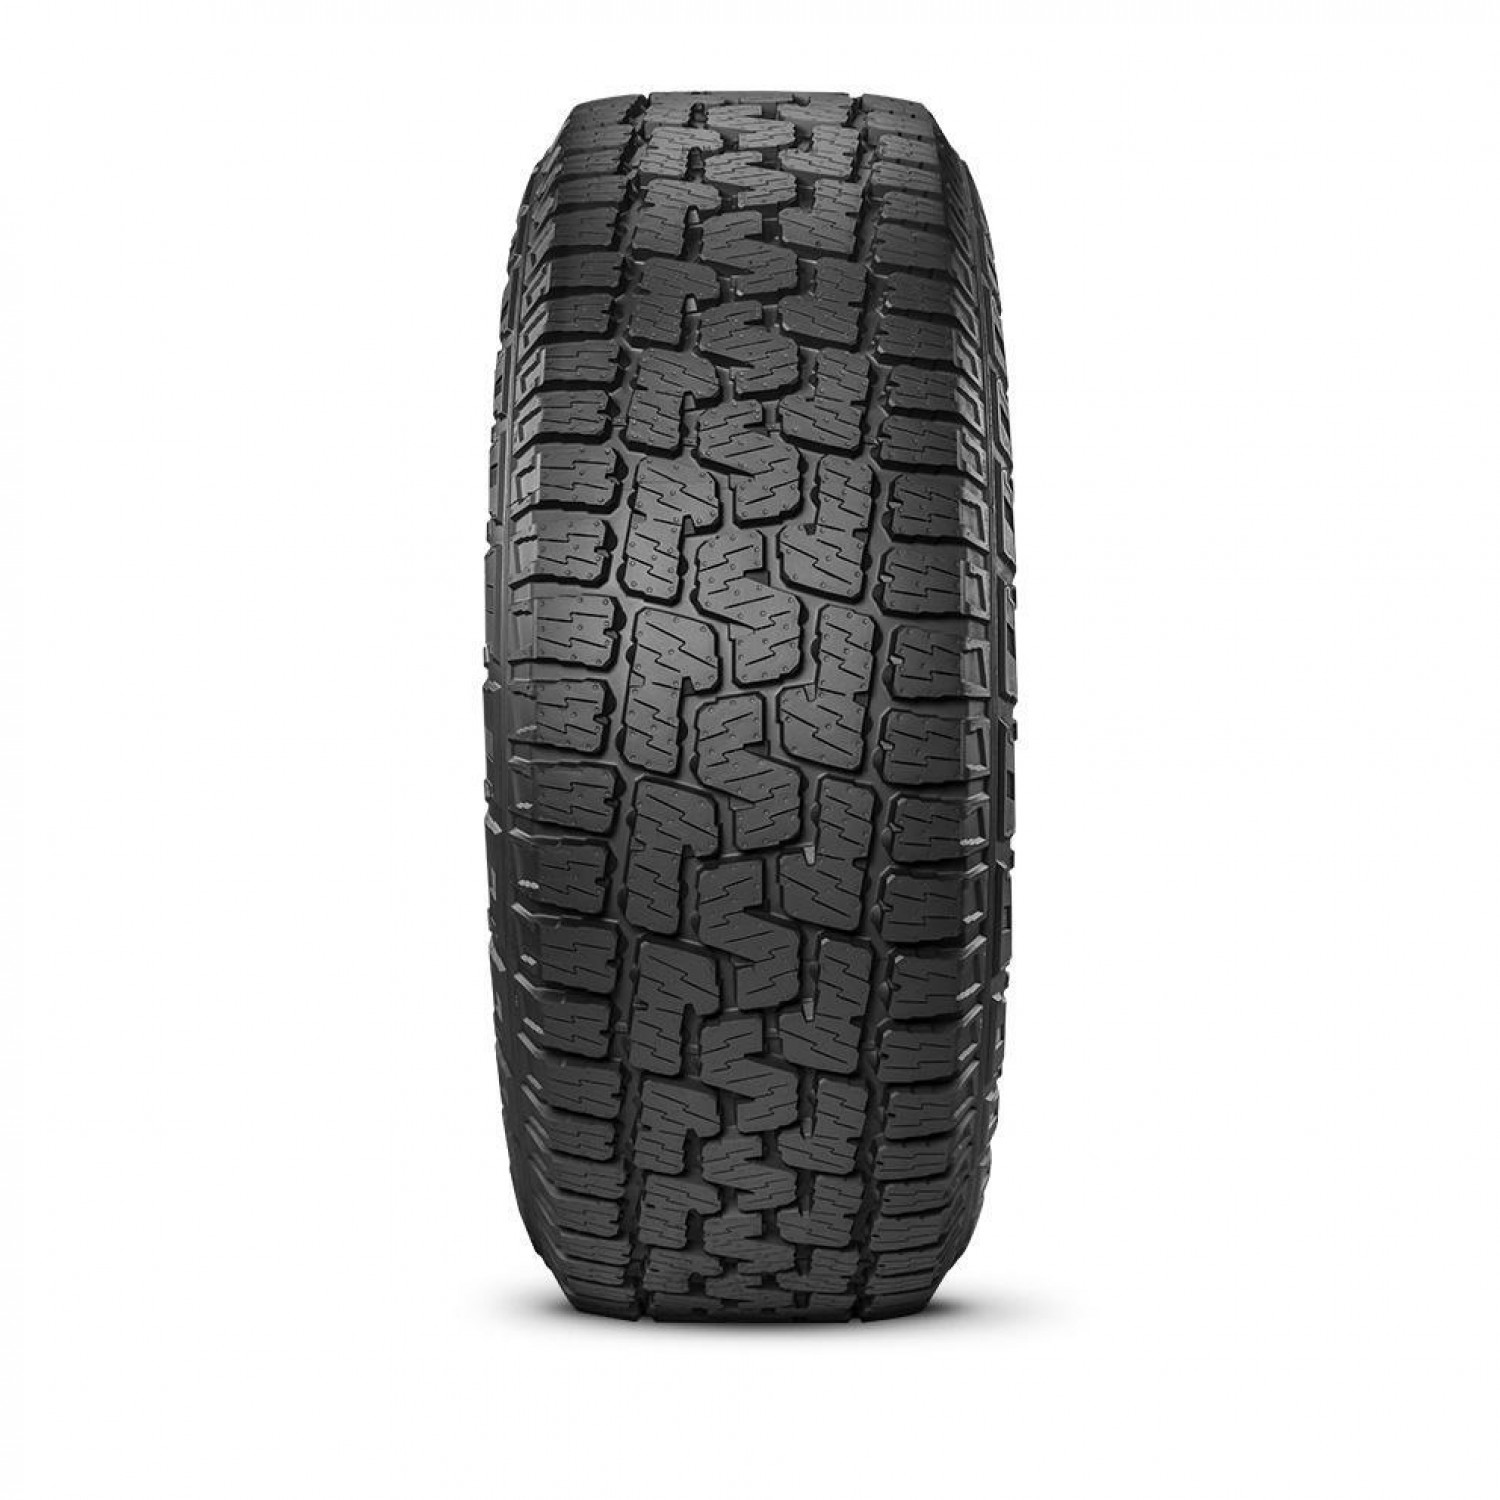 Pirelli Scorpion All Terrain Plus Reversable Outlined White Letters/Black  Sidewall Tire (245/70R17 110T) vzn121972